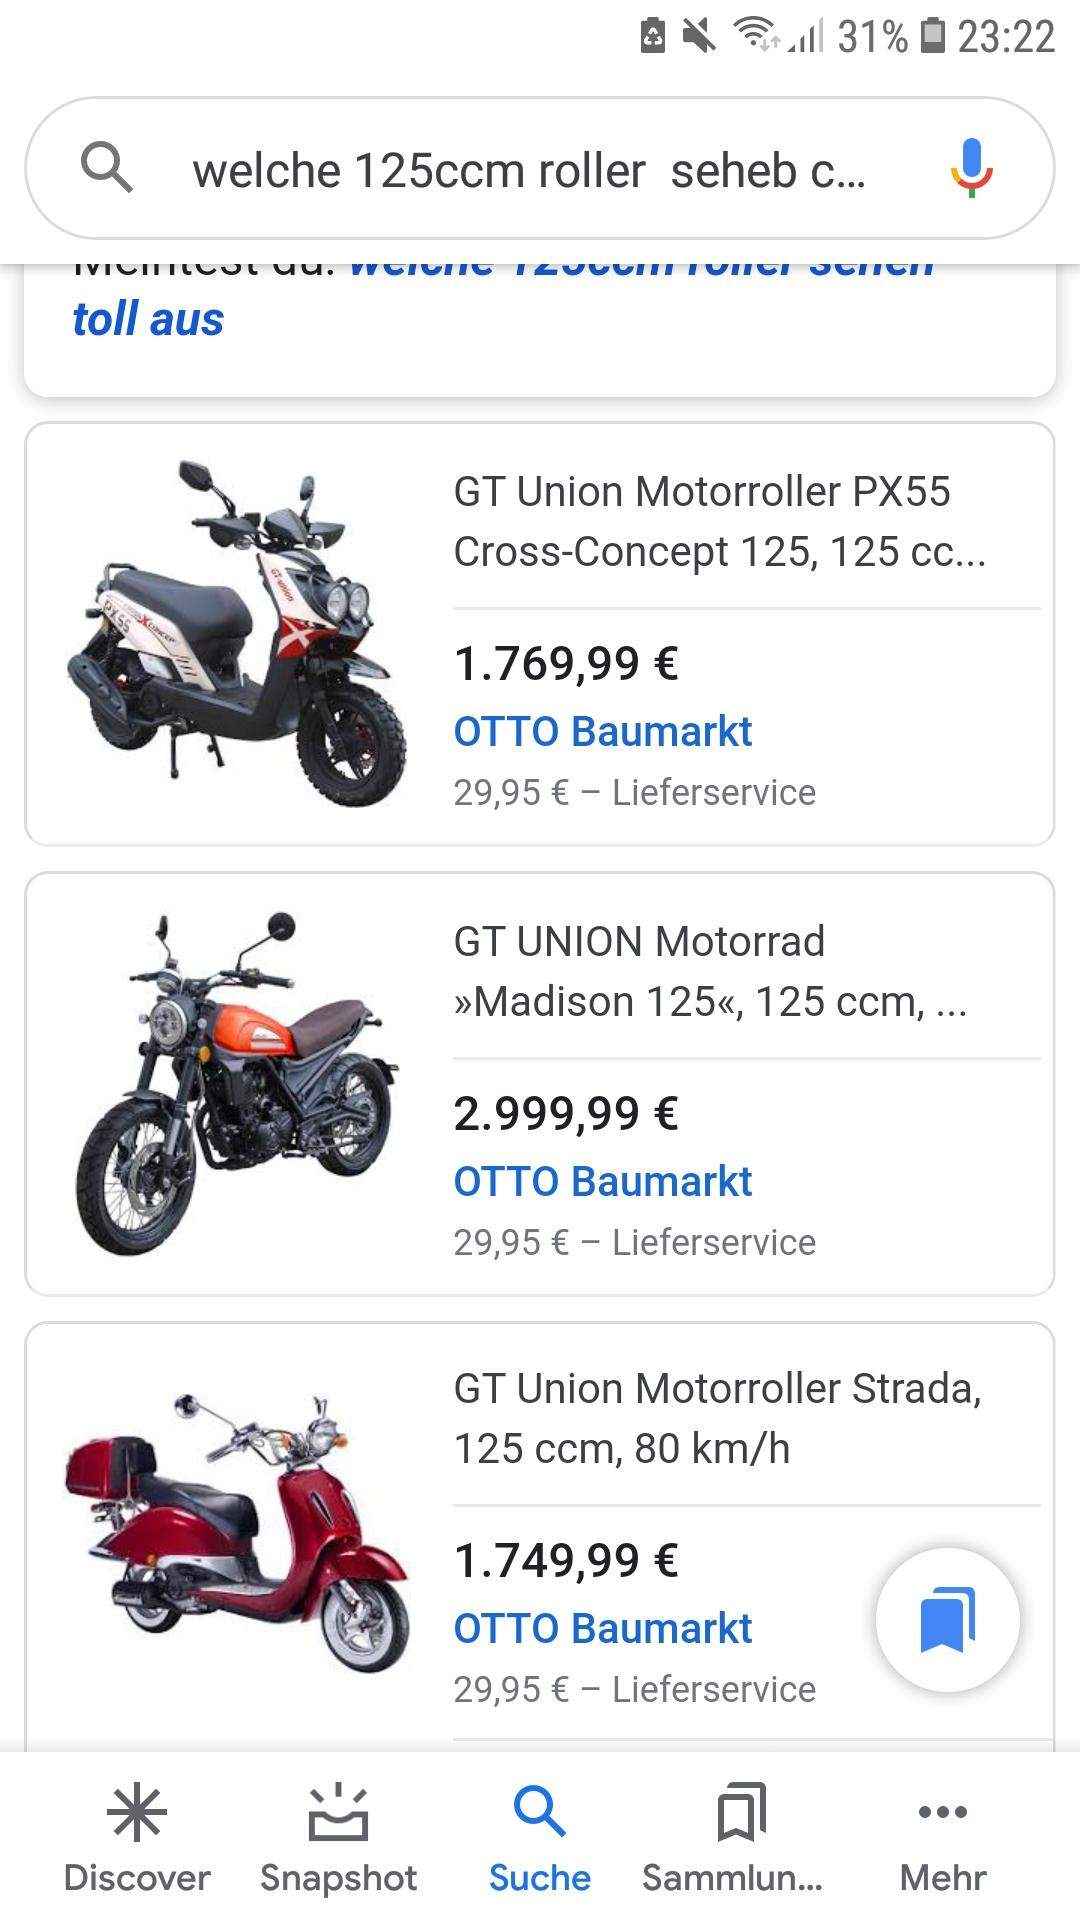 (Motorrad, Moped) so Mopeds teuer?